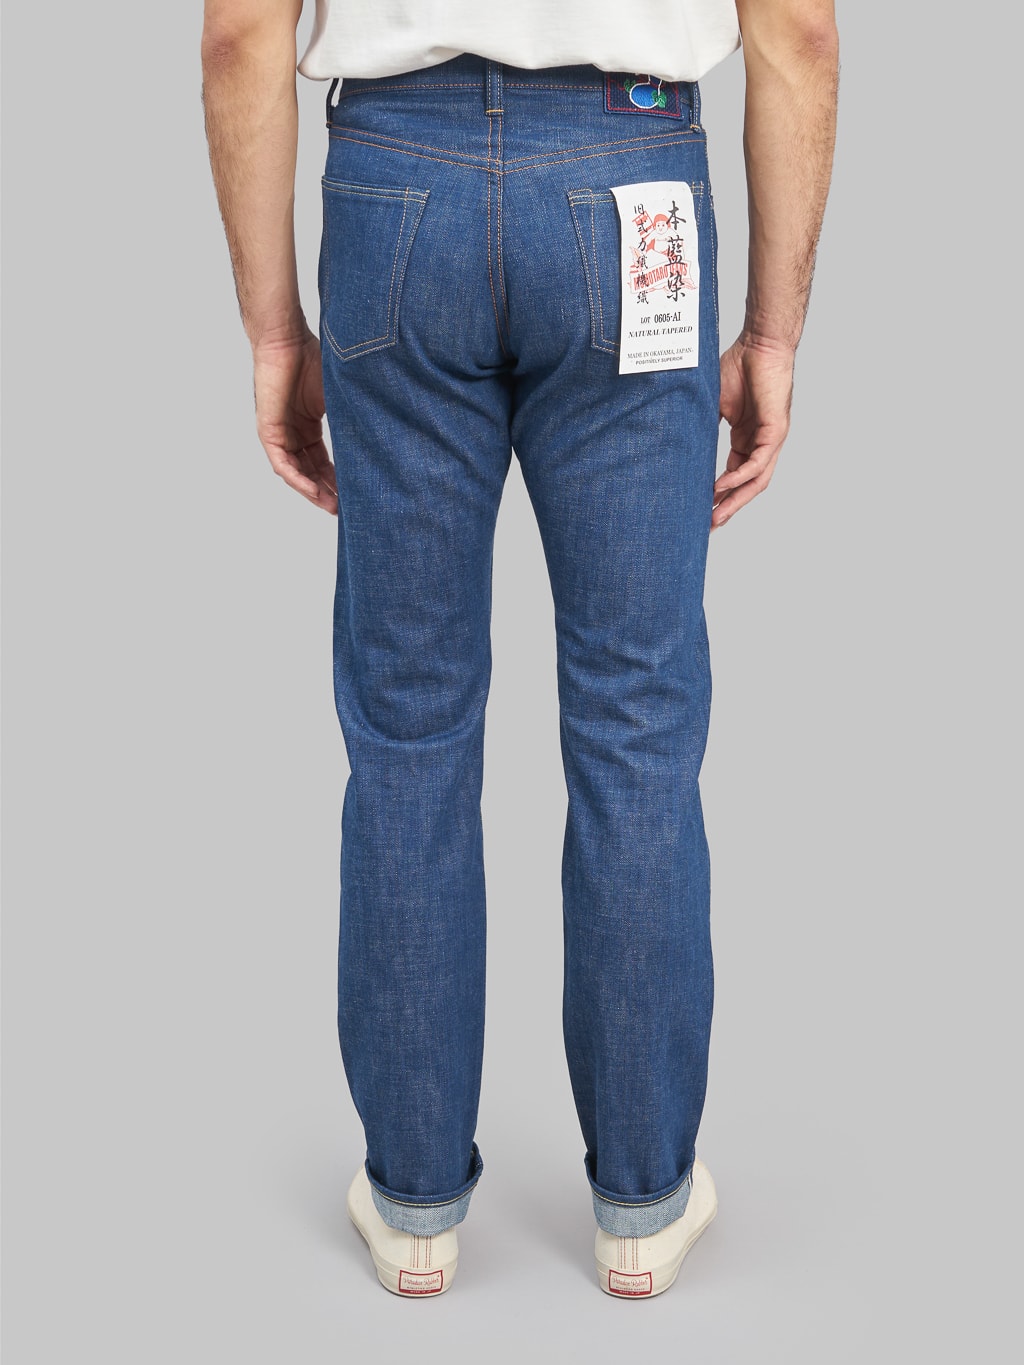 momotaro 0605 ai natural indigo dyed natural tapered denim jeans back